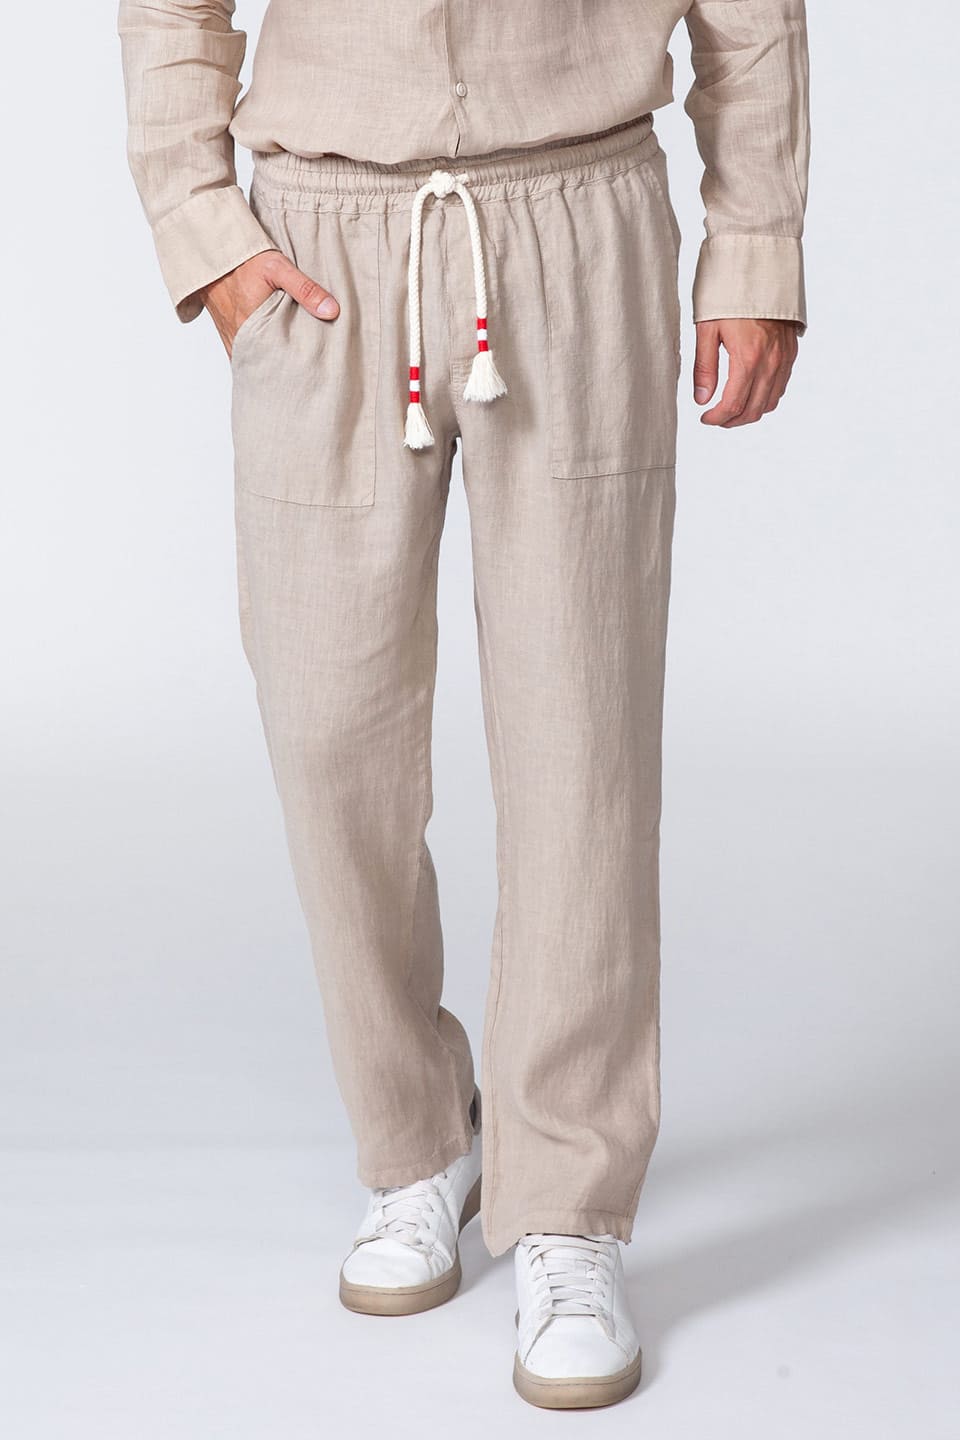 Thumbnail for Product gallery 5, MC saint barth male calais trousers beige main